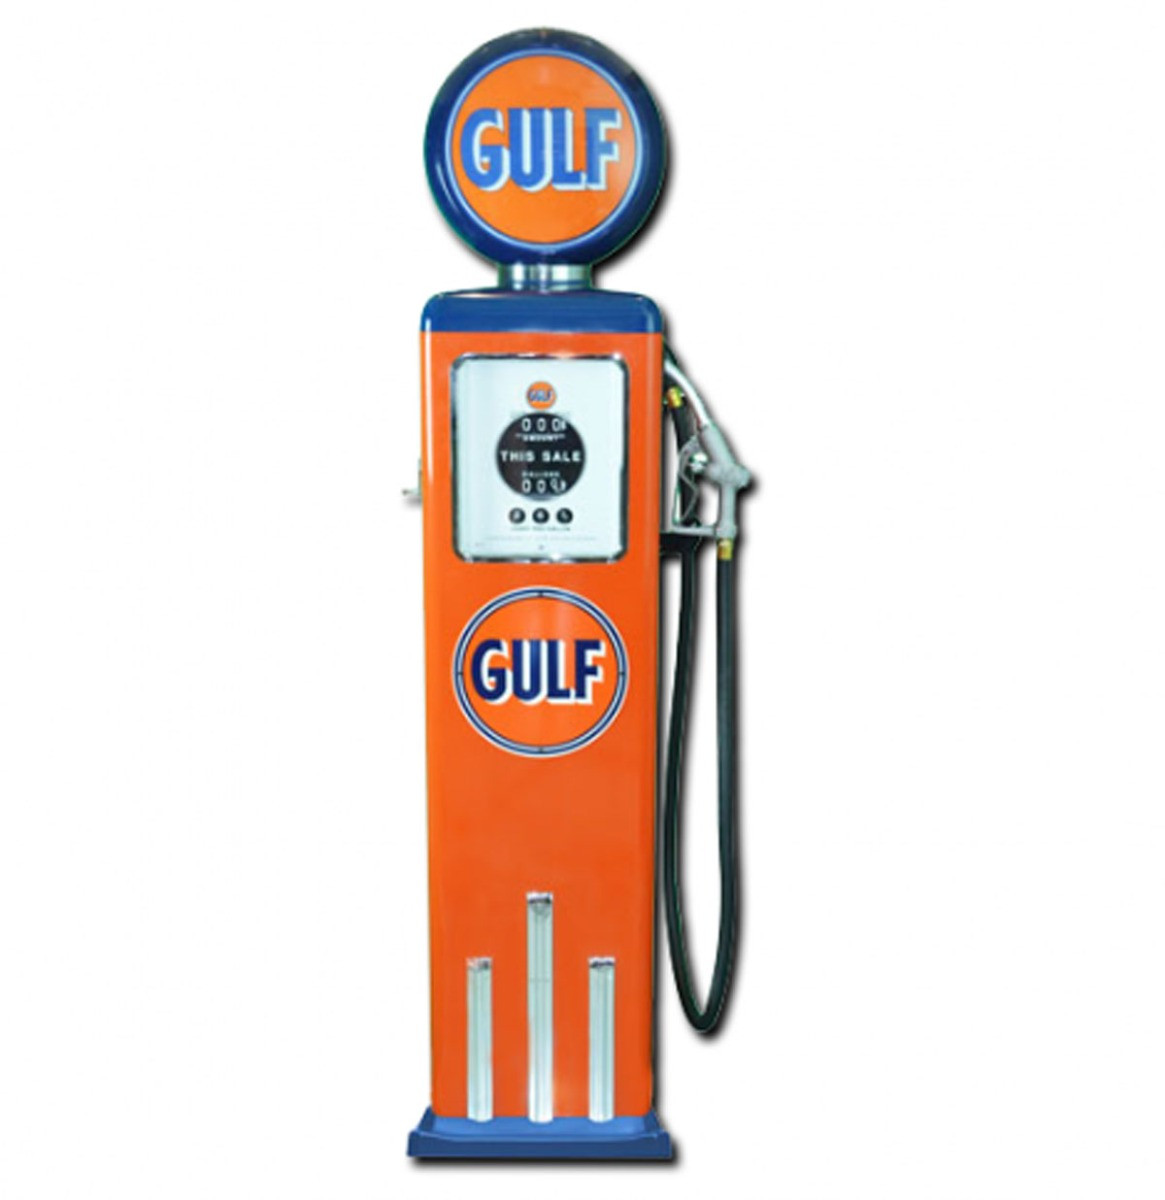 Gulf 8 Ball Benzinepomp Met Voet Oranje & Blauw Reproductie